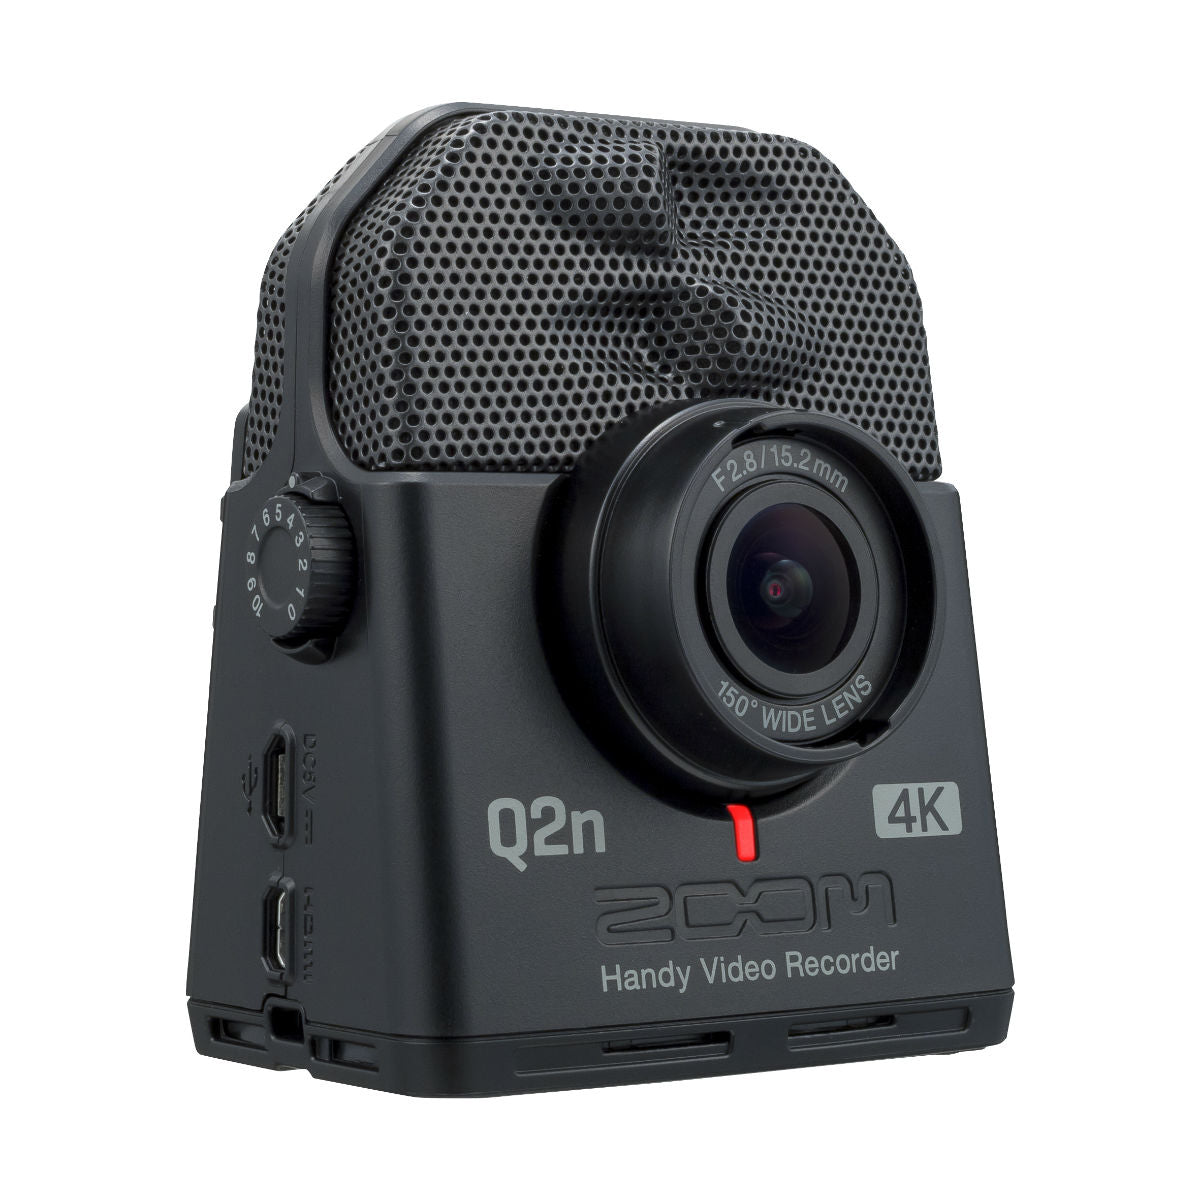 Zoom Q2n-4K Handy Video Recorder